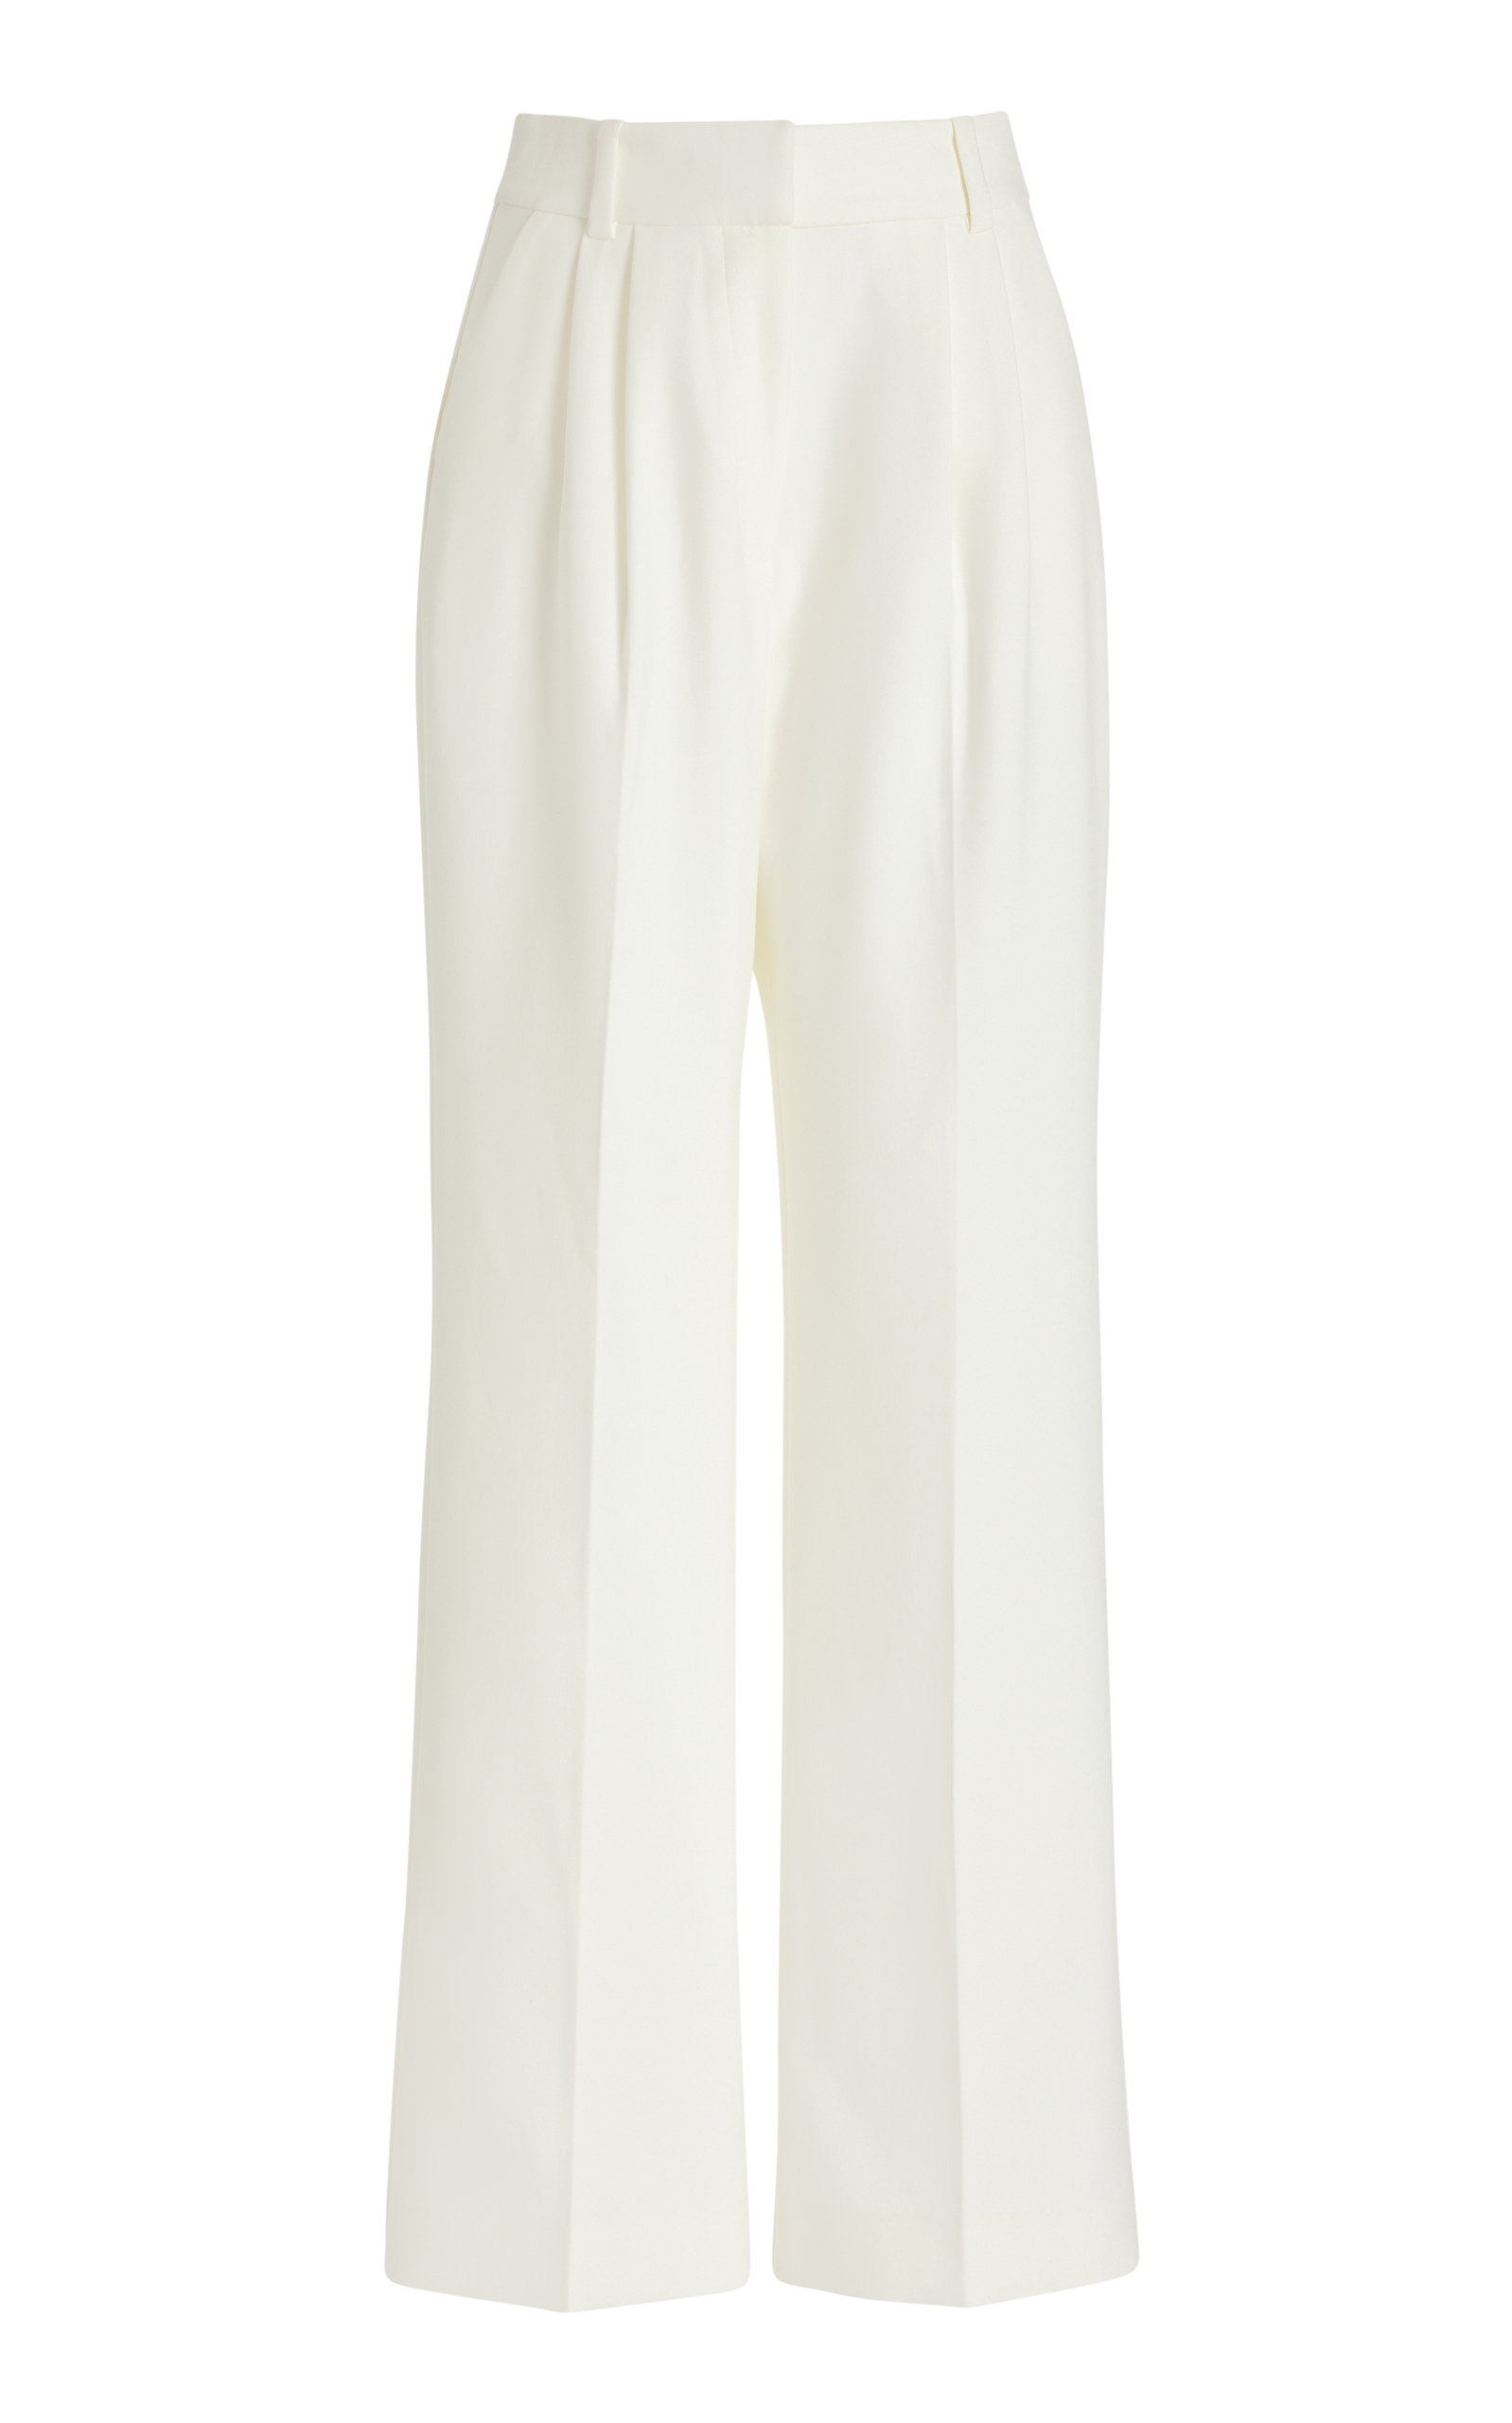 Favorite Daughter - Women's The Favorite High-Waisted Pleated Pants - Ivory - US 10 - Moda Operandi